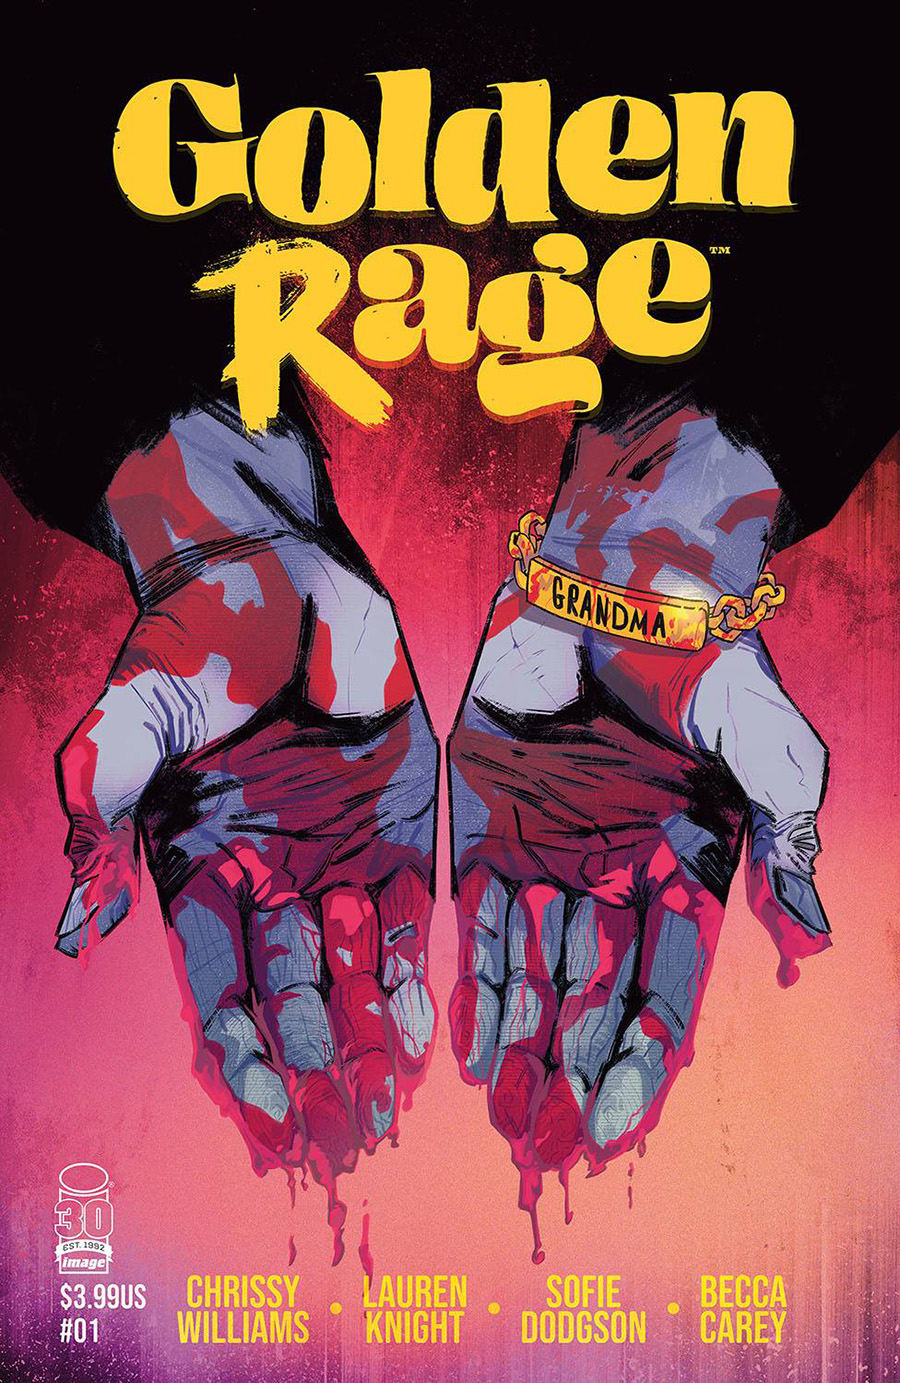 Golden Rage #1 Cover A Regular Lauren Knight Cover